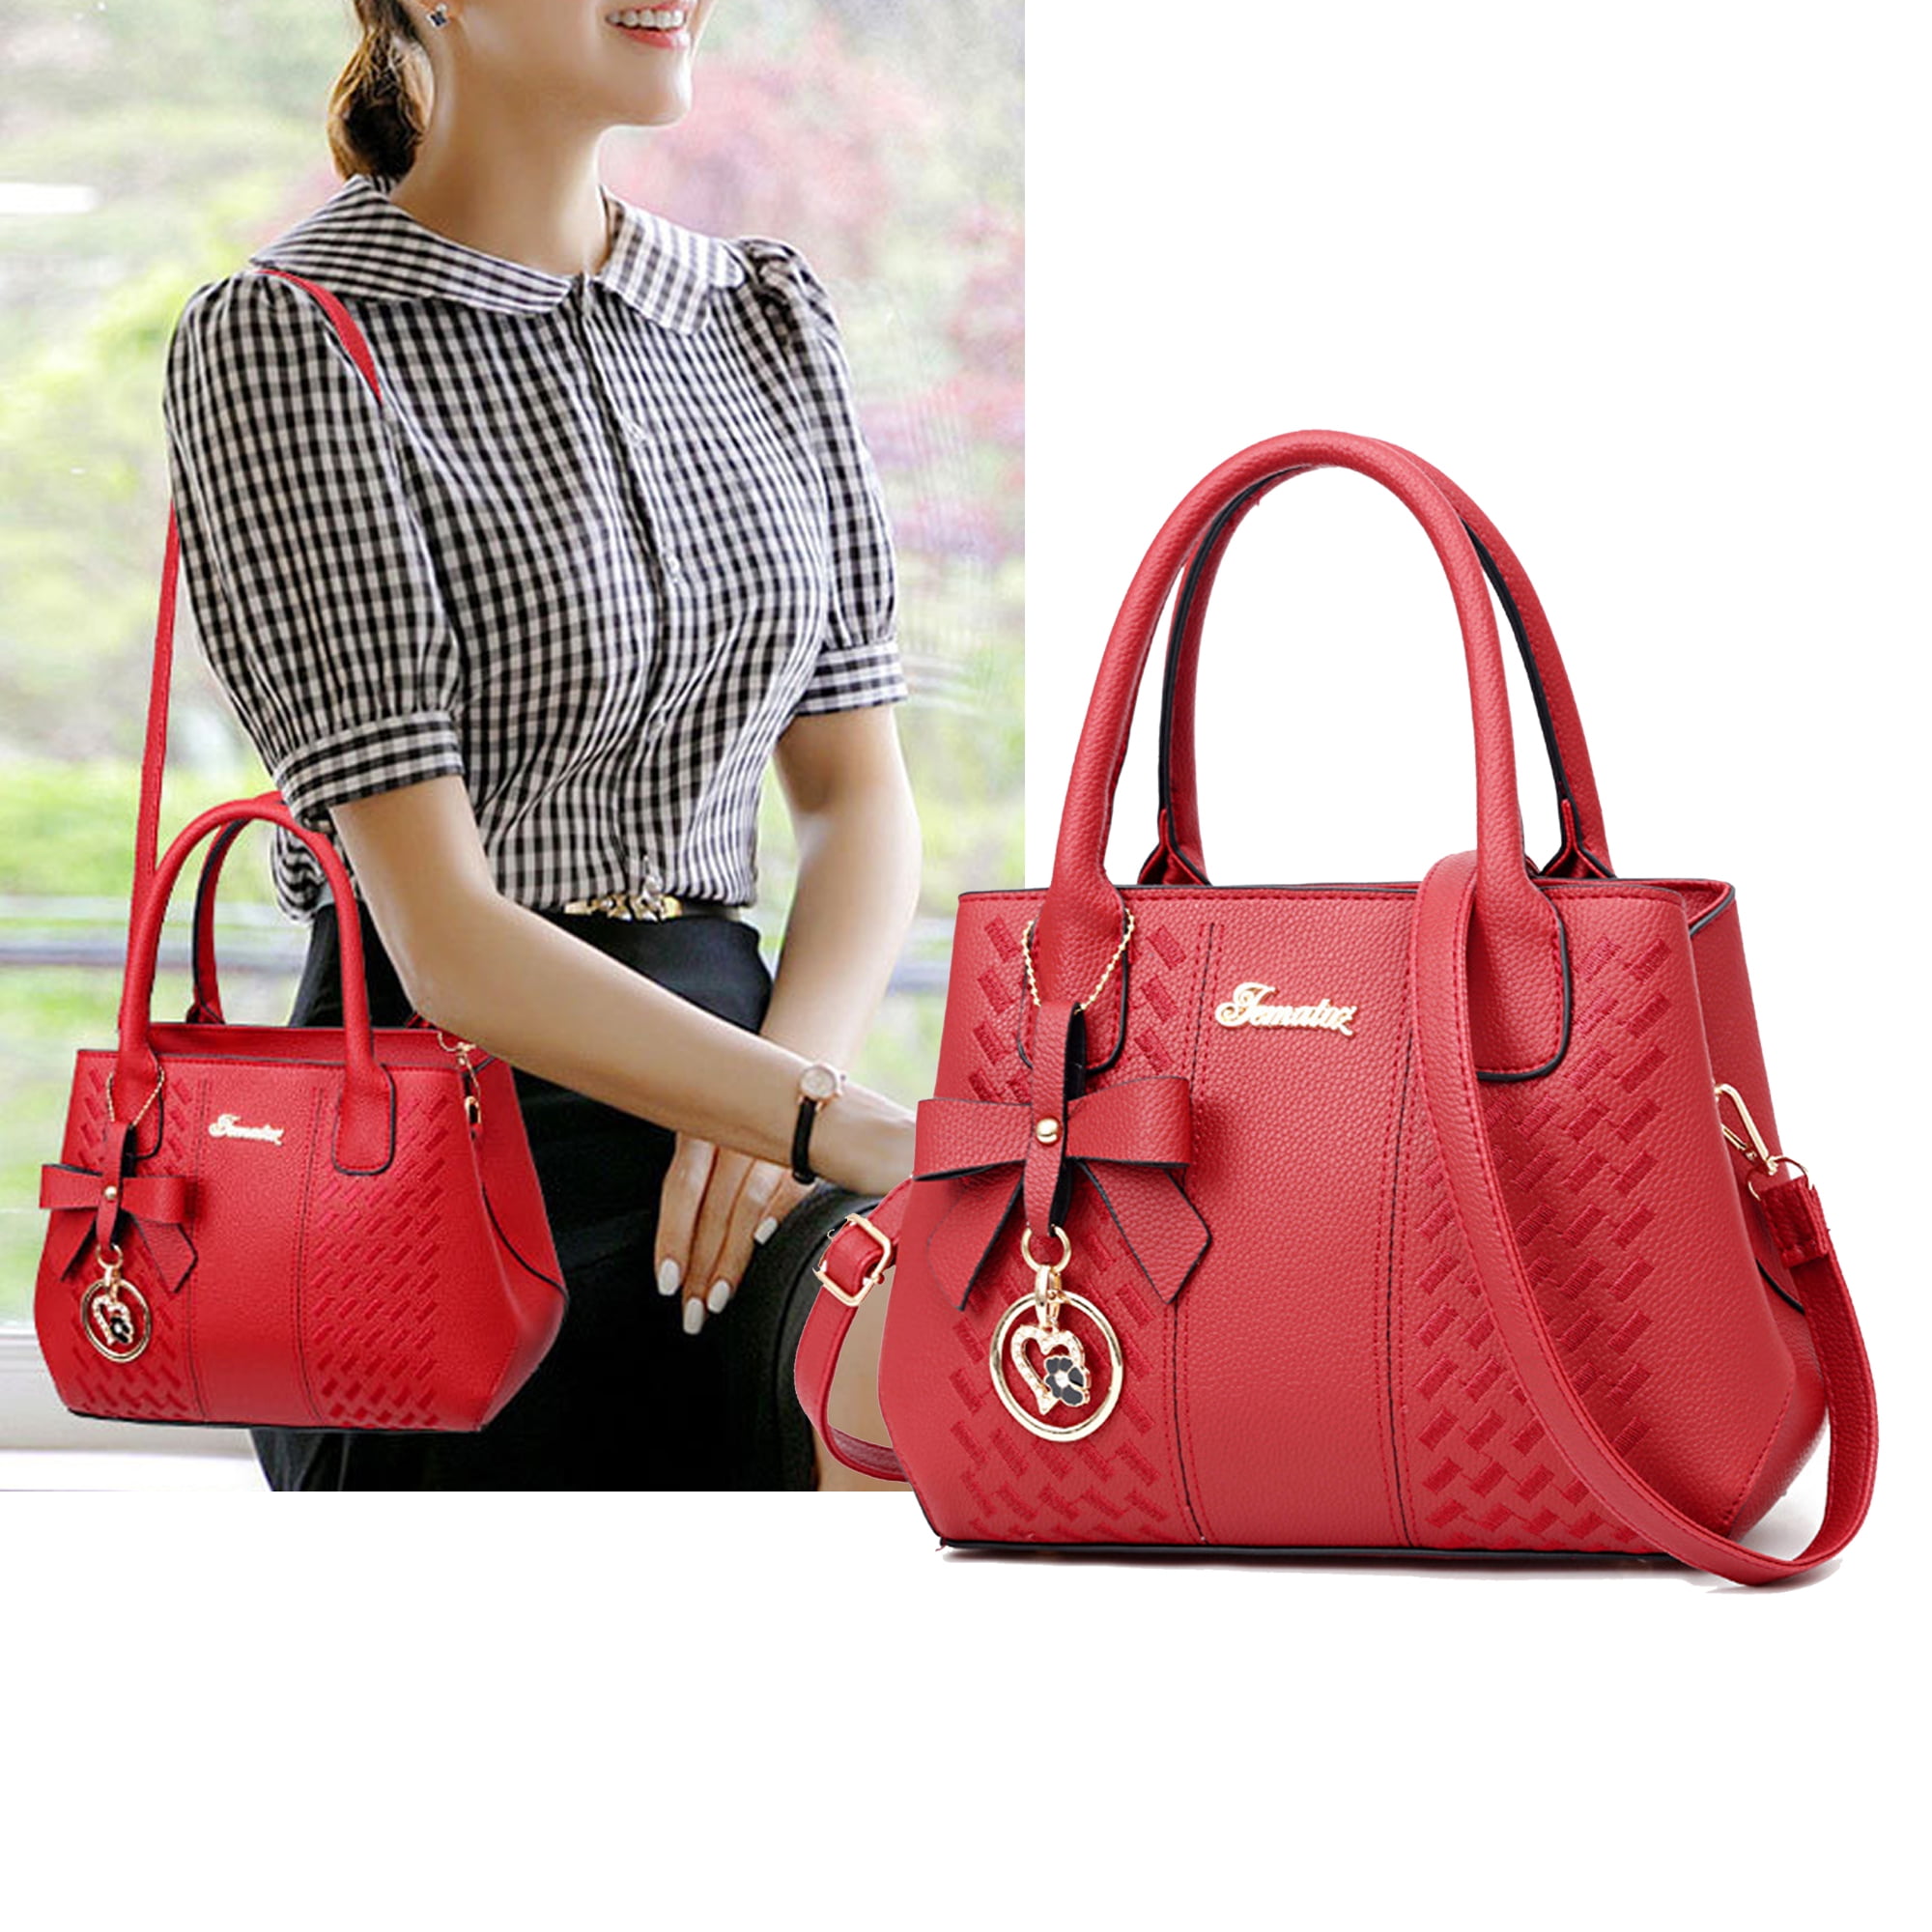 Dior Bag Prices | Bragmybag | Lady dior bag, Lady dior, Dior purses